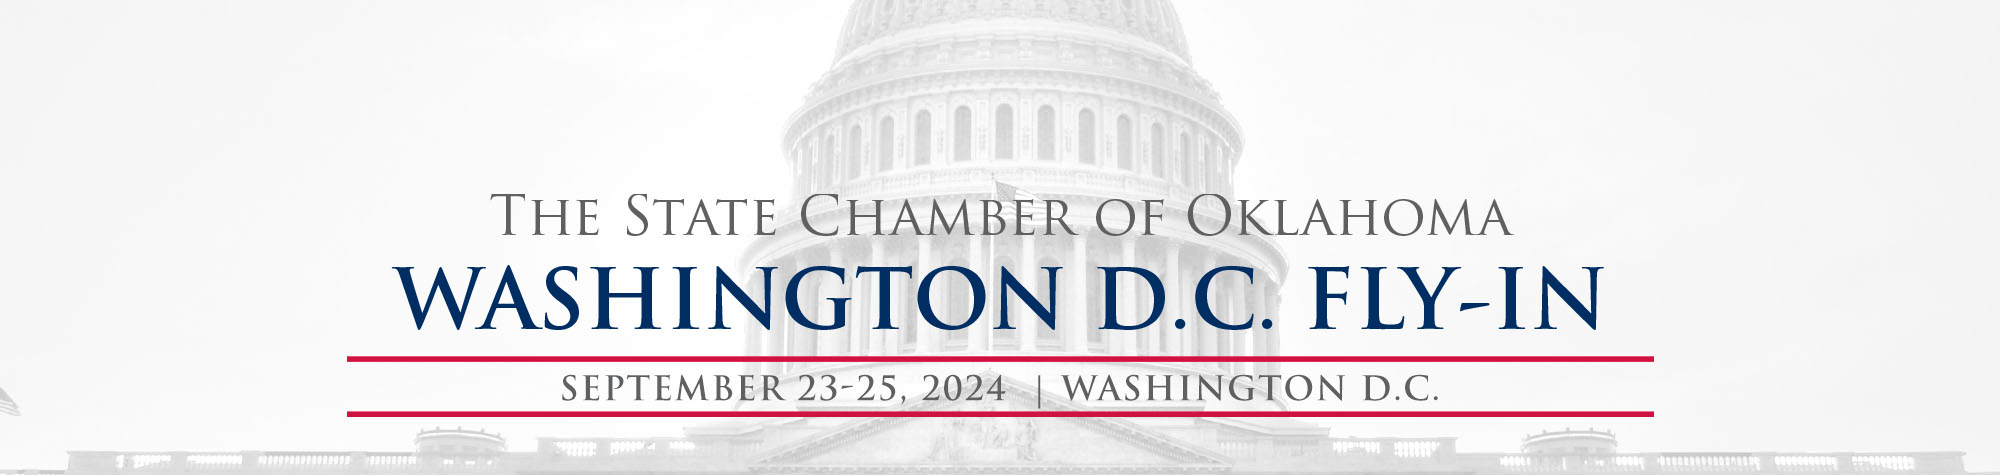 Washington D.C. Fly-In | Sept. 23-25, 2024